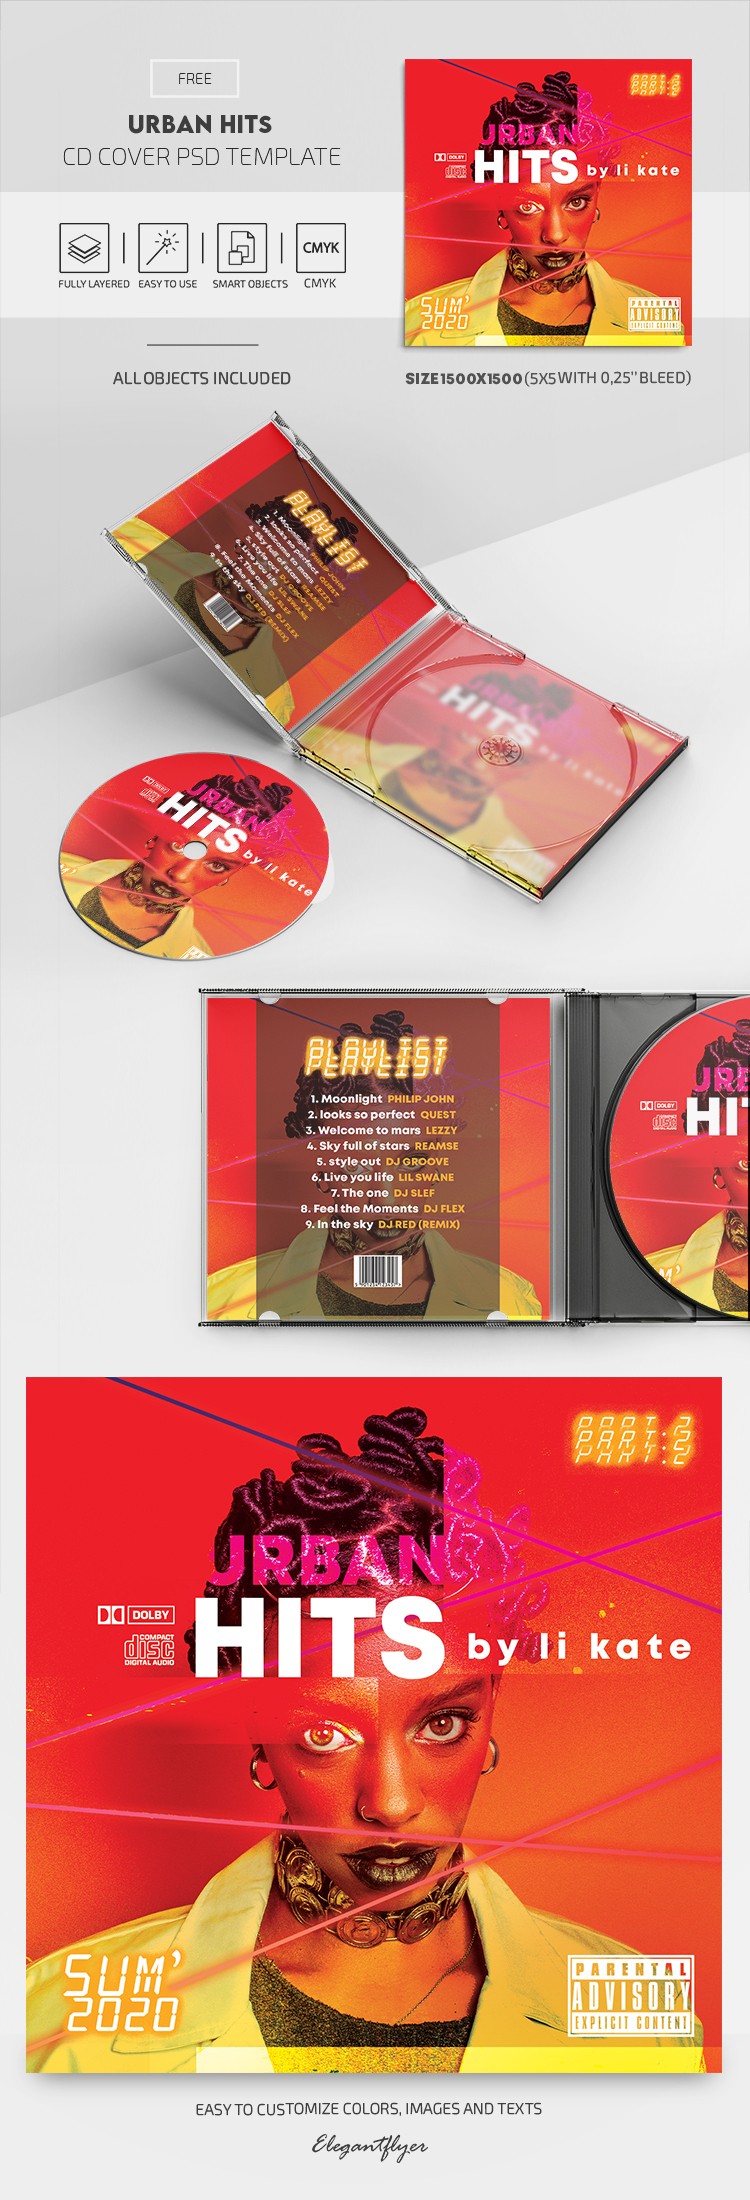 Capa do CD Urban Hits by ElegantFlyer